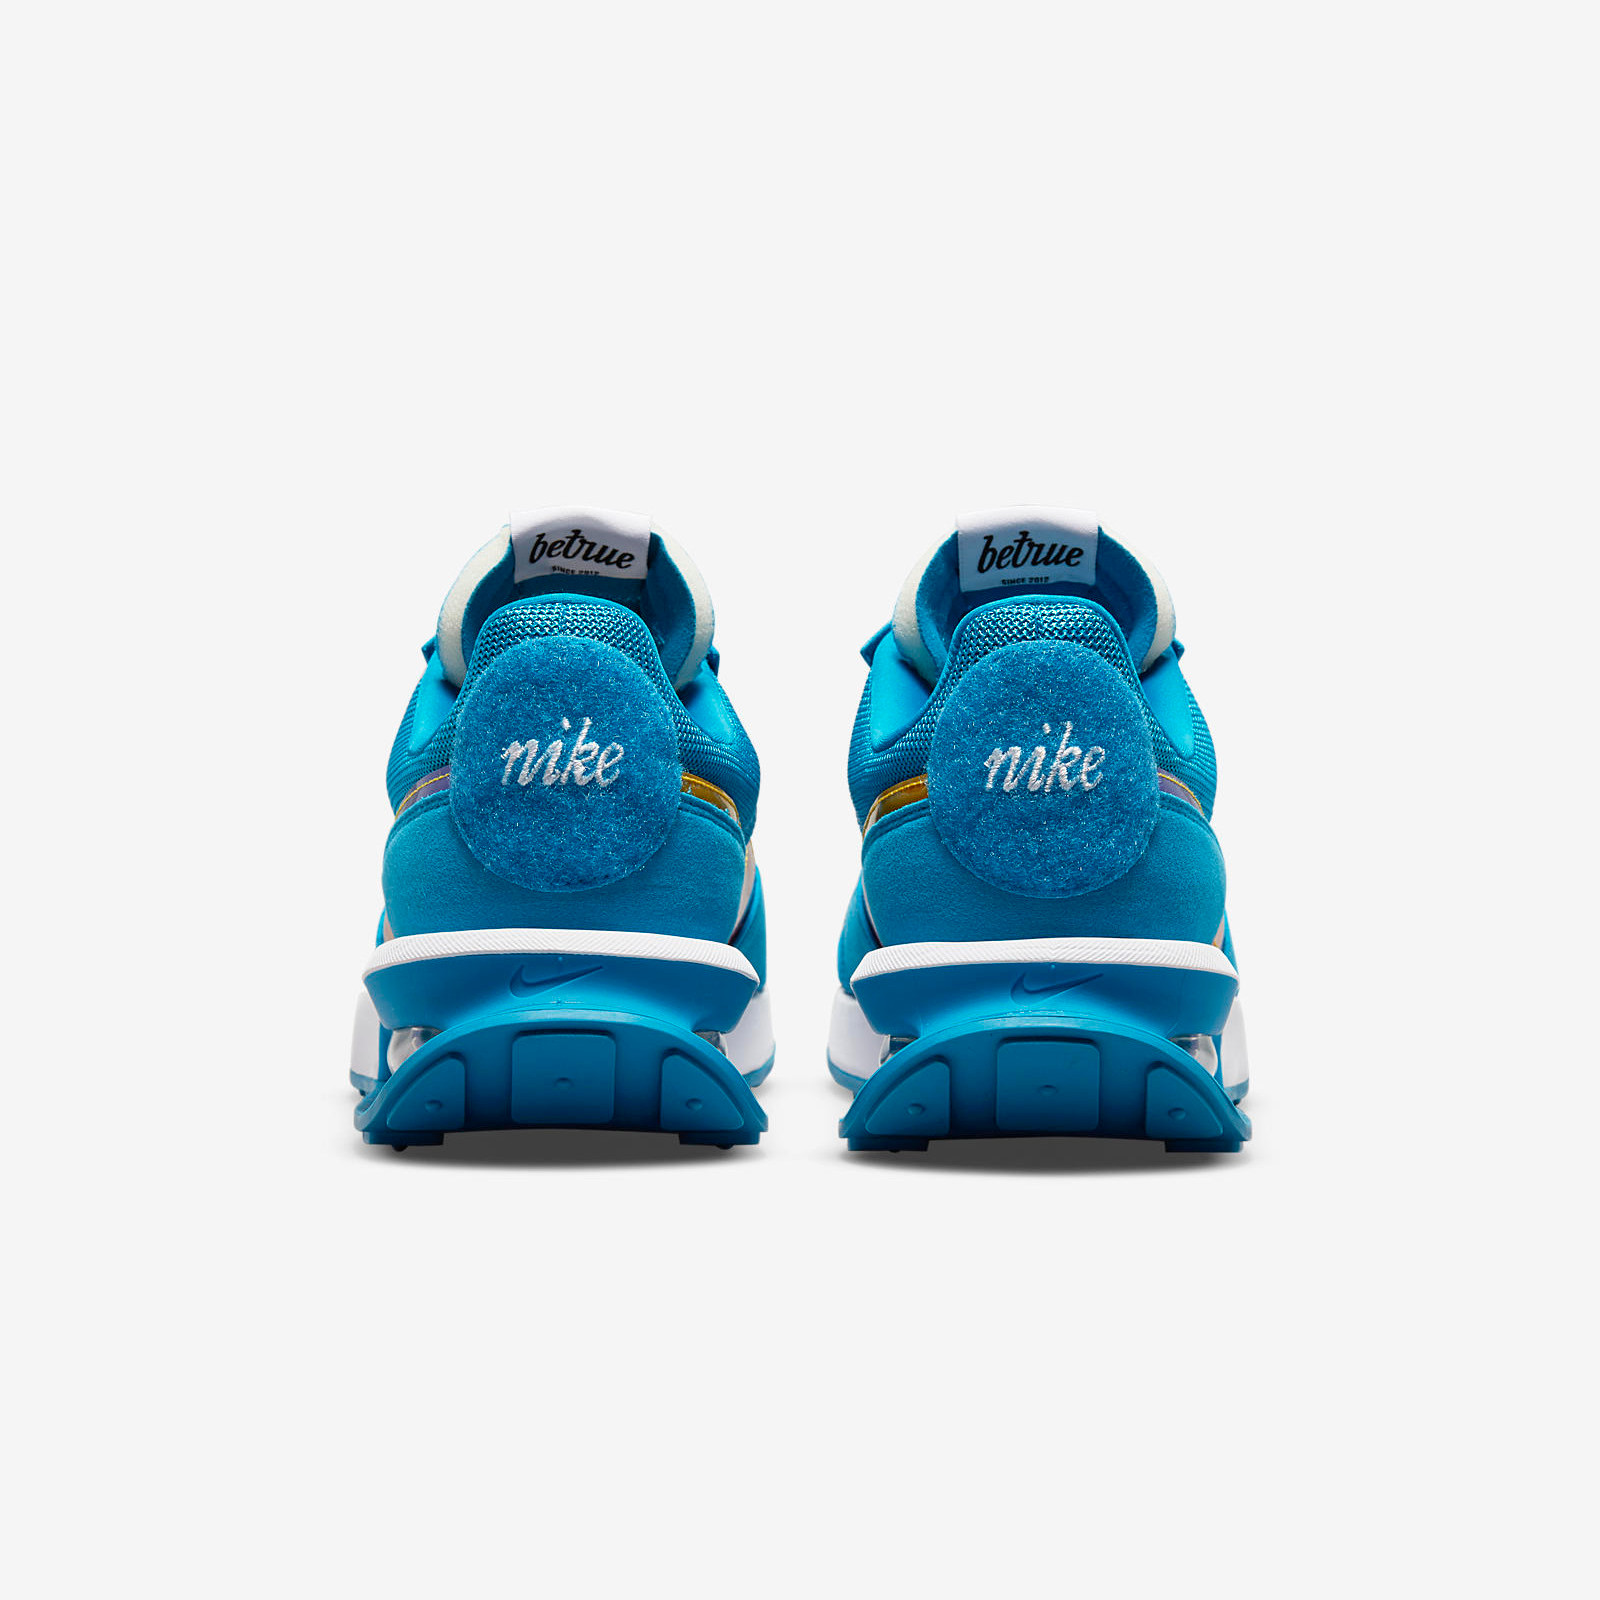 Nike Air Max Pre-Day
« Be True »